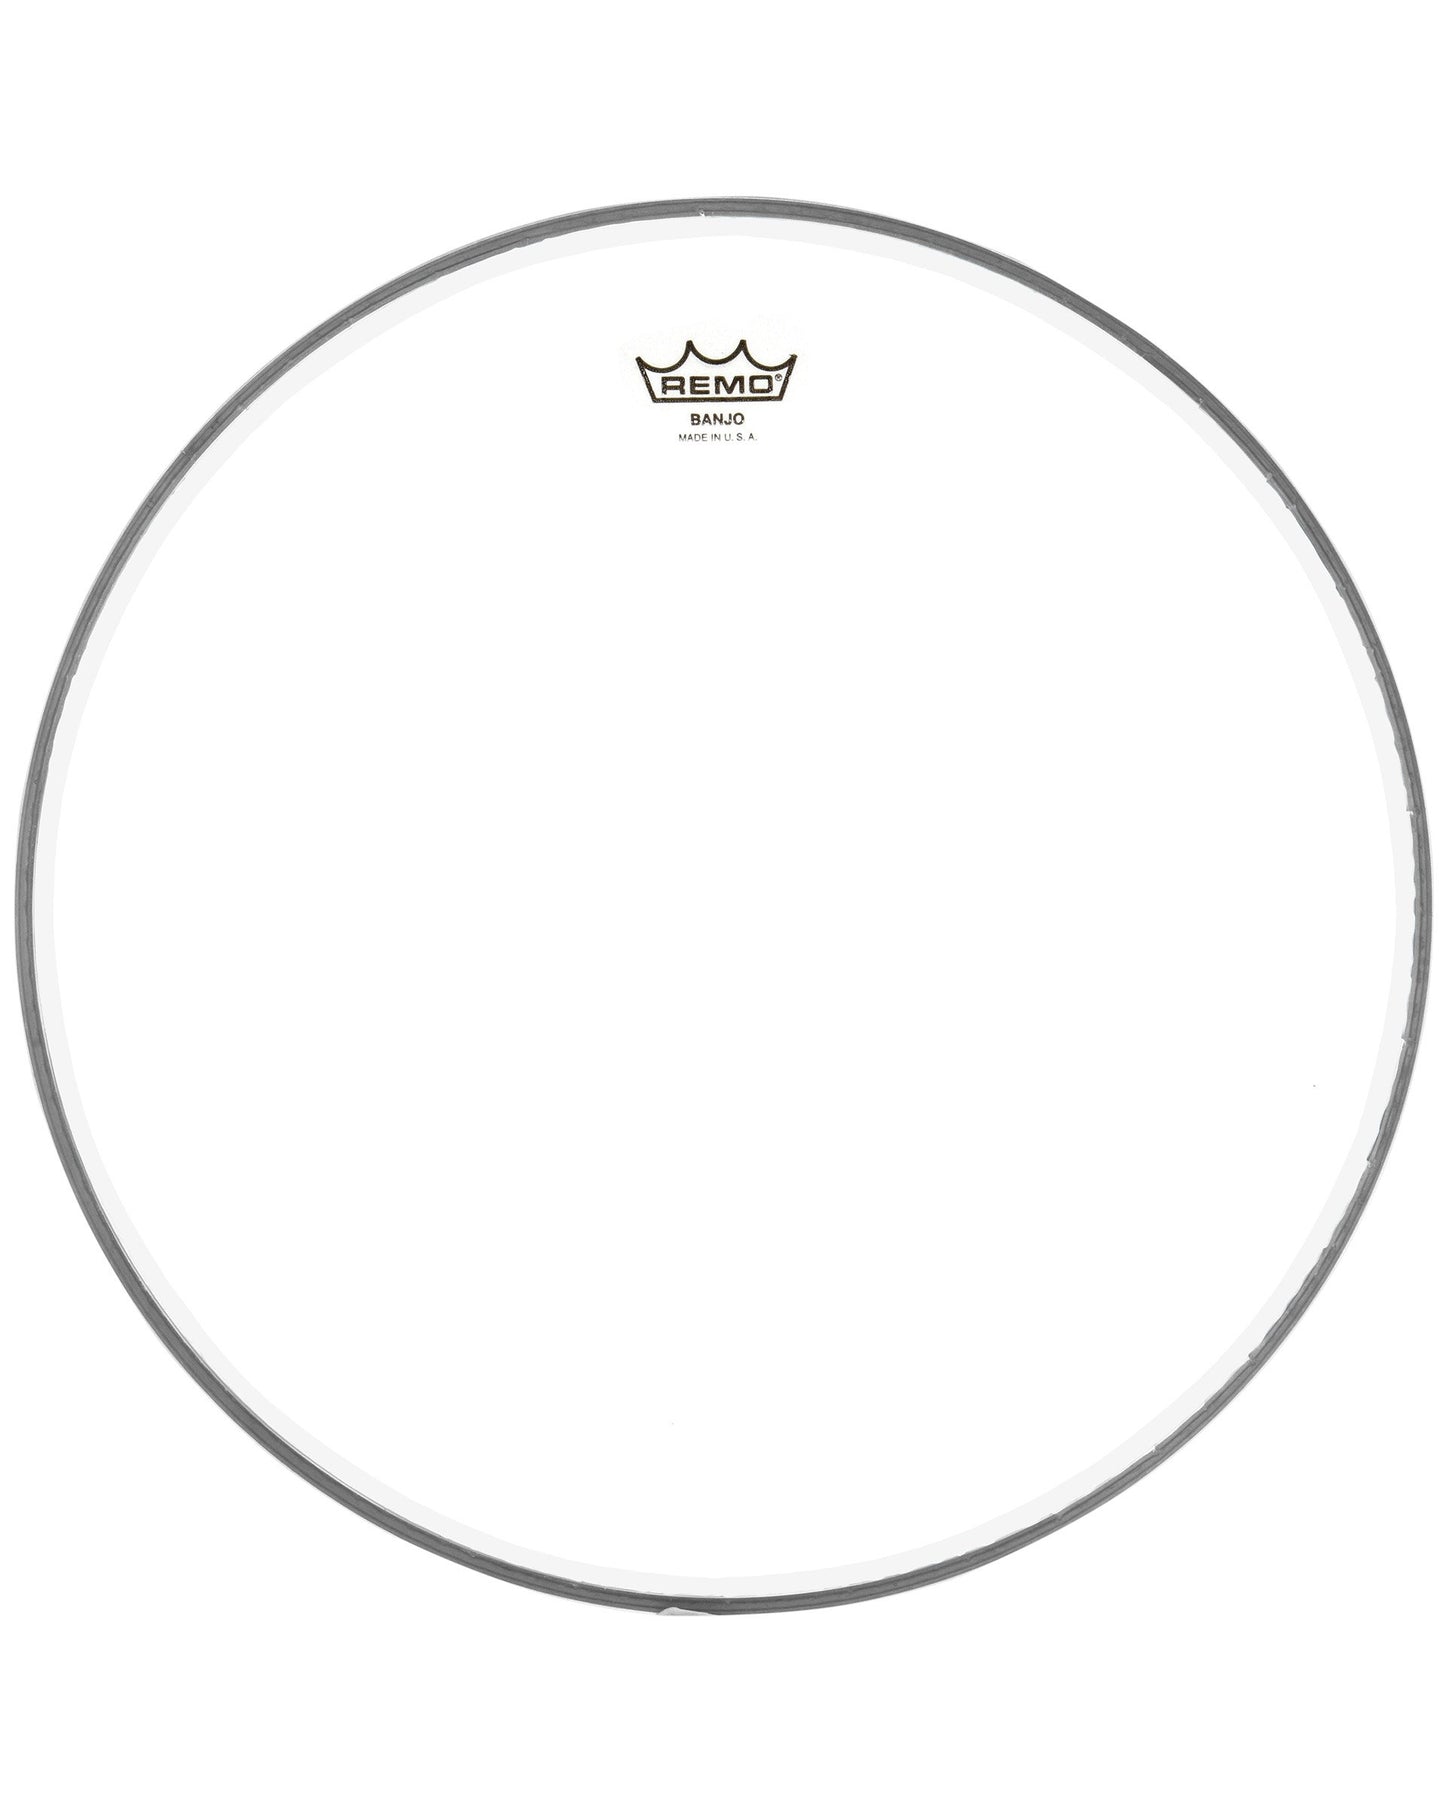 Remo Clear Banjo Head, 10 3/4 Inch Diameter, Low Crown (3/8 Inch)